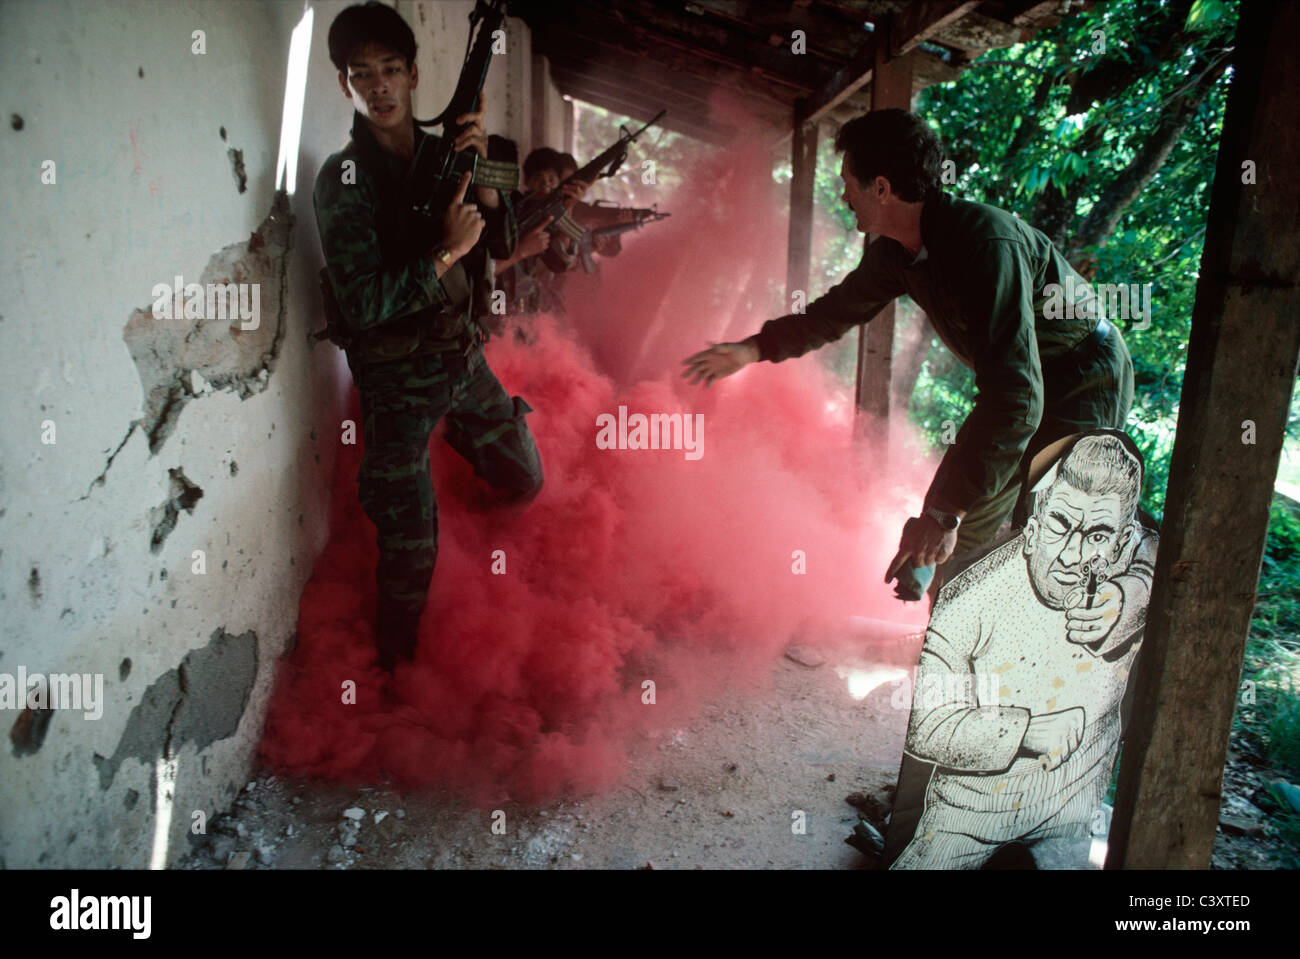 A counter-terrorist commando unit in Latin America trained by Israeli expert. Stock Photo